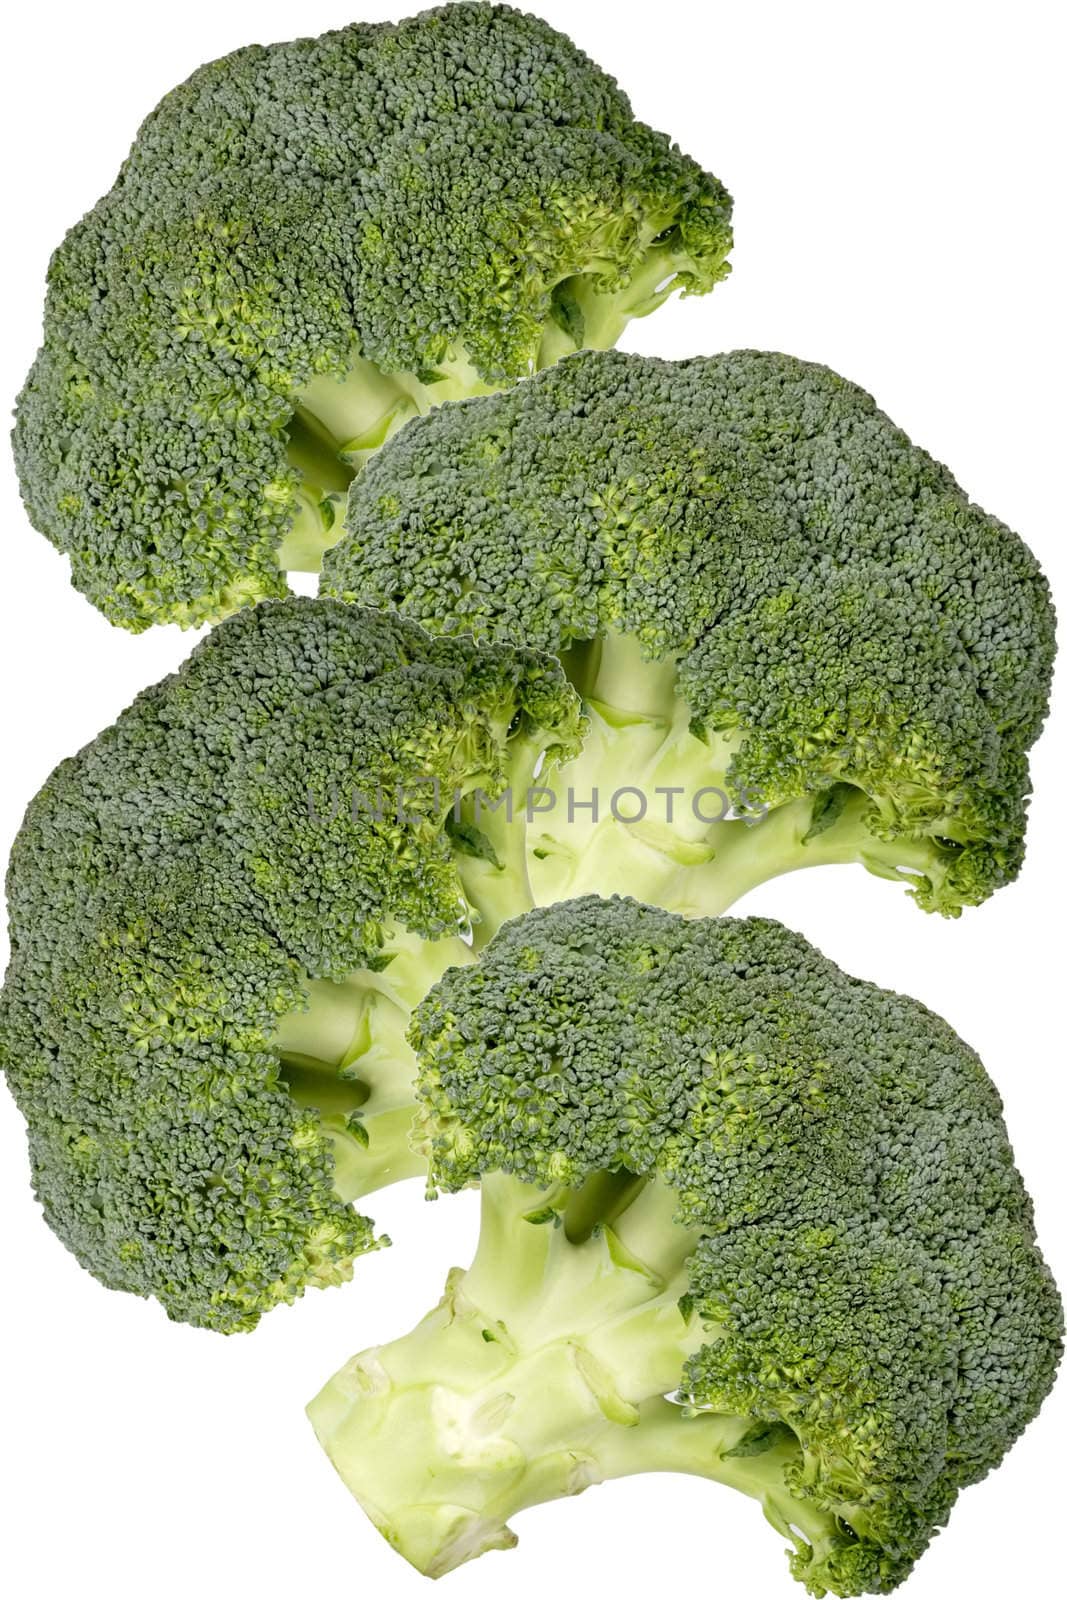 Raw broccoli by Teamarbeit